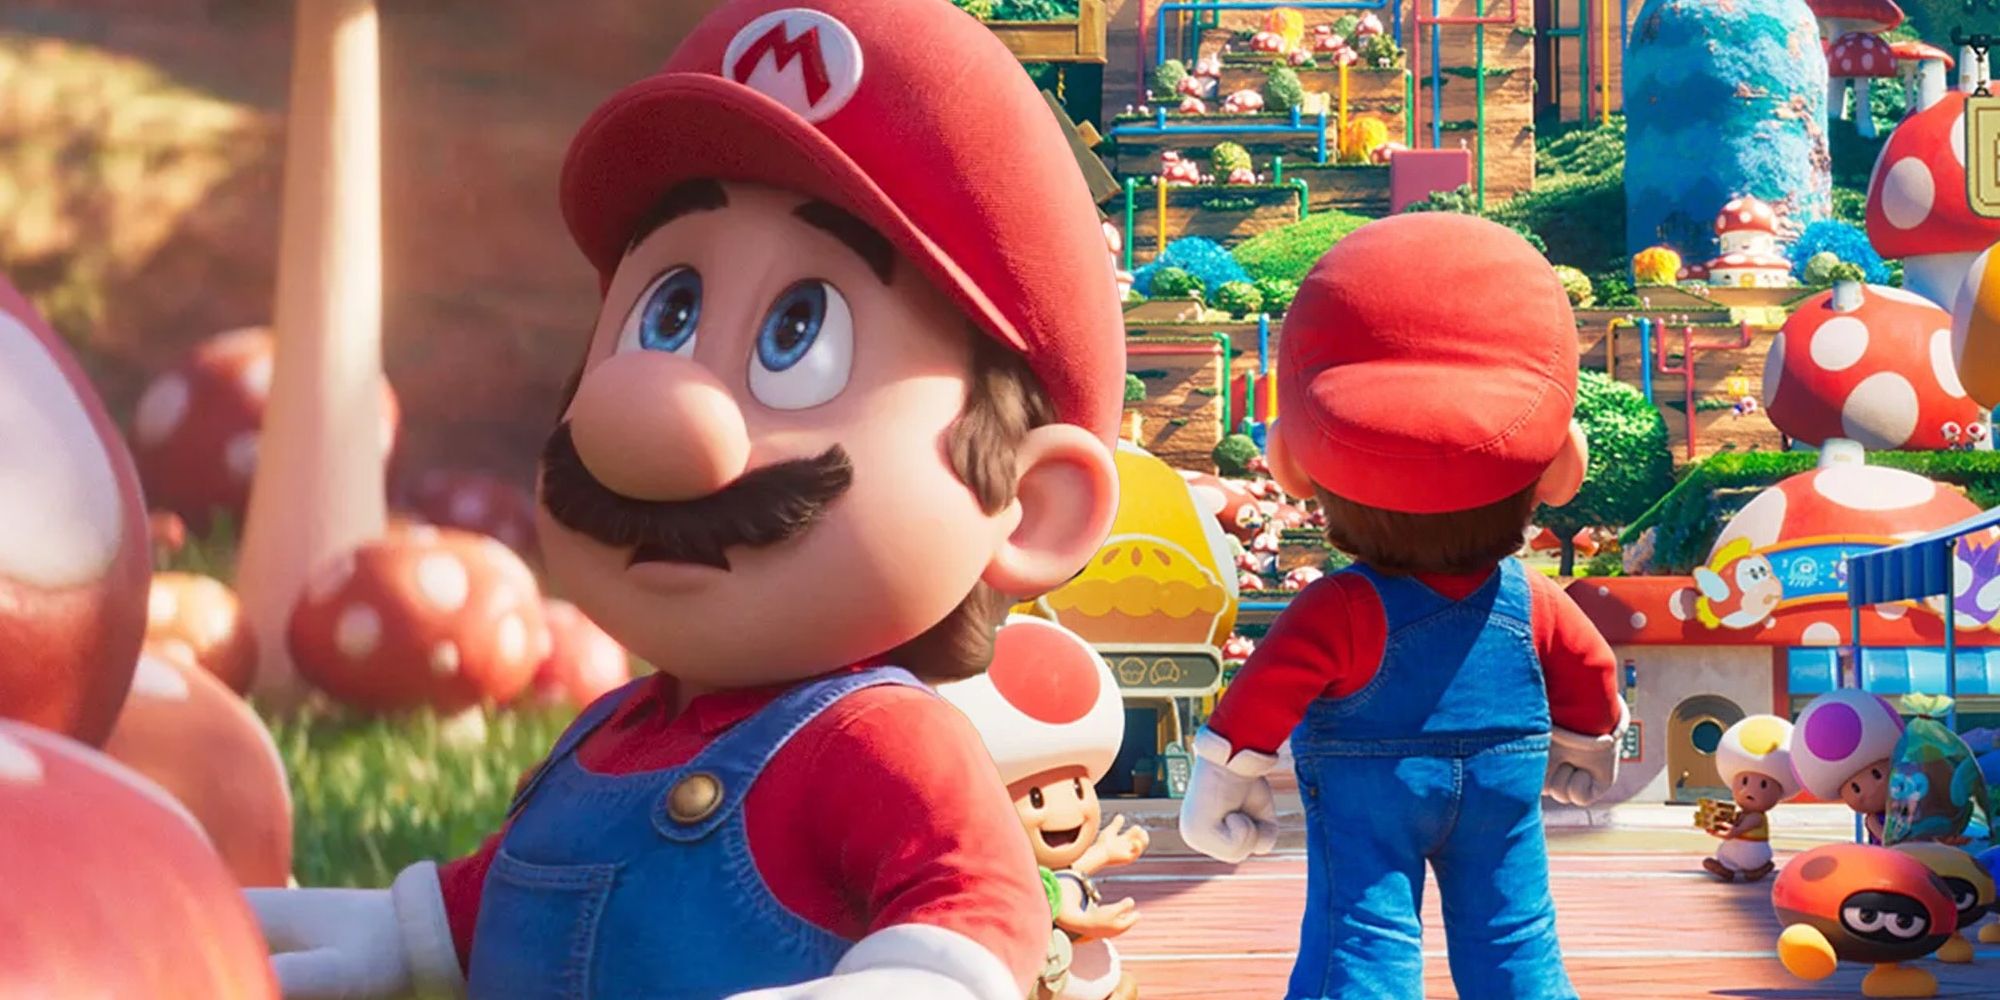 Mario and the Mario teaser poster